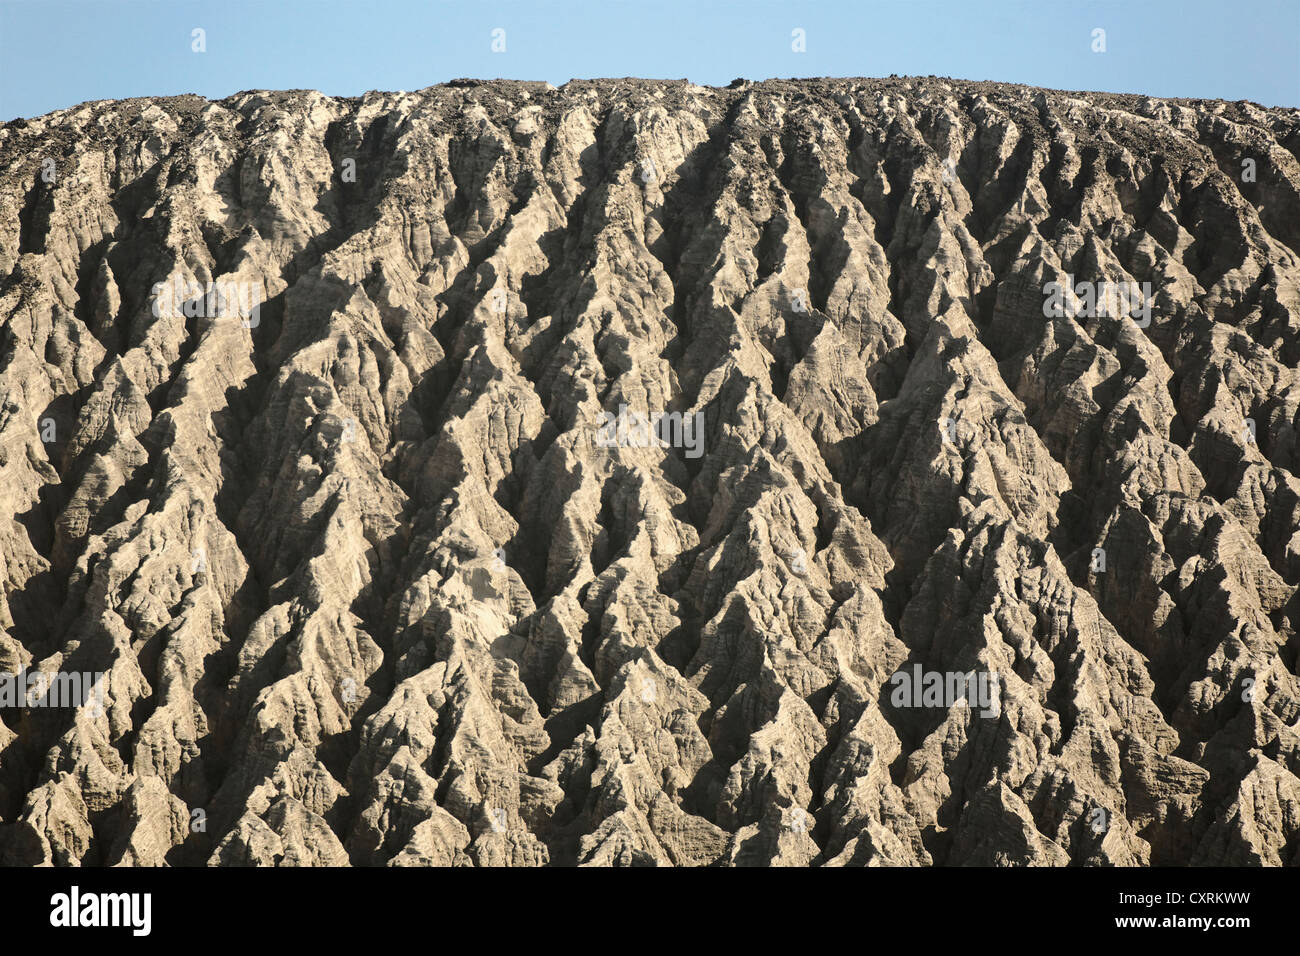 Mountain with deep furrows, erosion from wind and water, San Benedicto Island, near Socorro, Revillagigedo Islands, archipelago Stock Photo